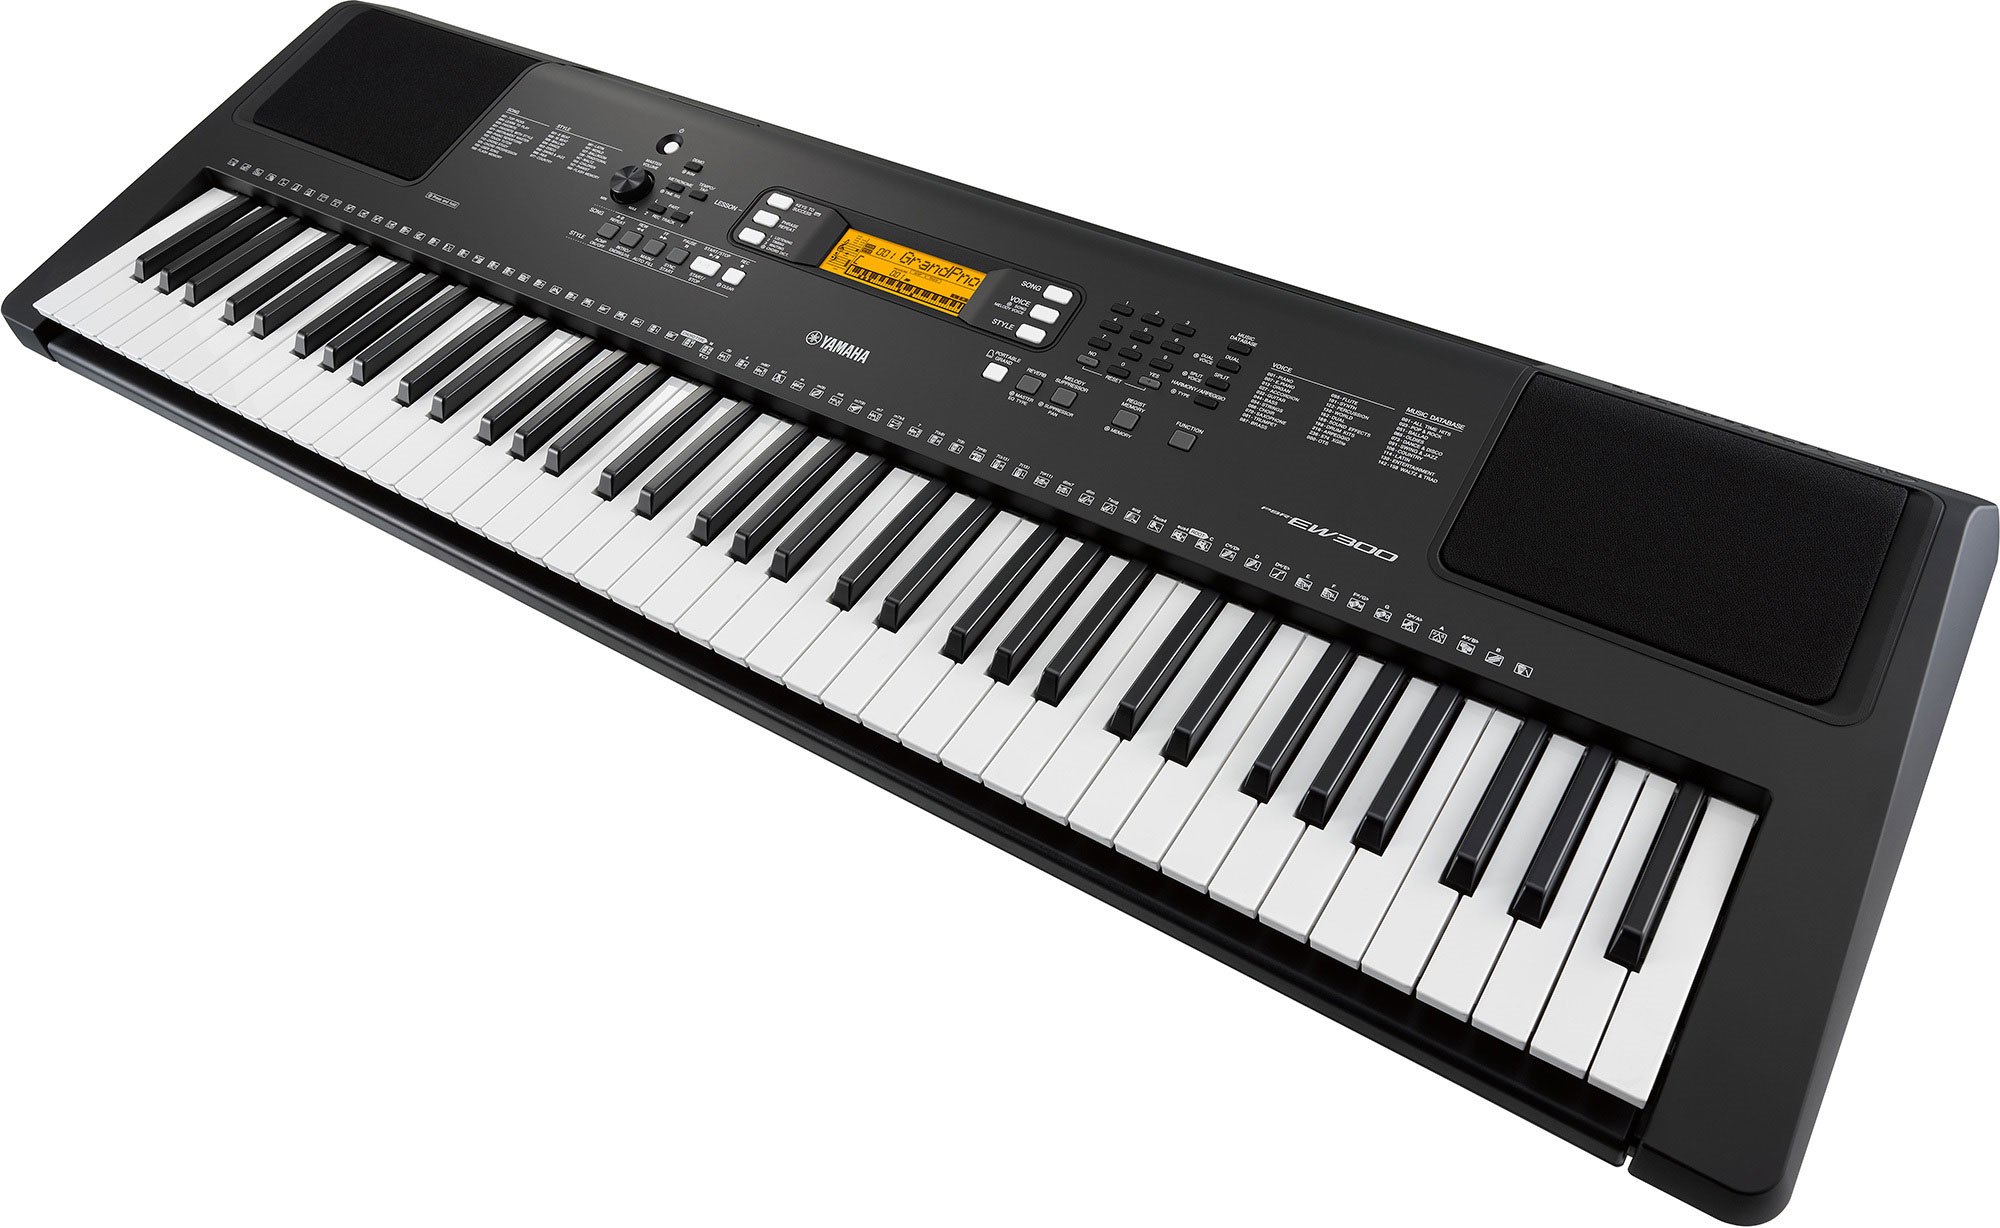 PSR-EW300 - Gallery - Portable Keyboards - Keyboard Instruments ...